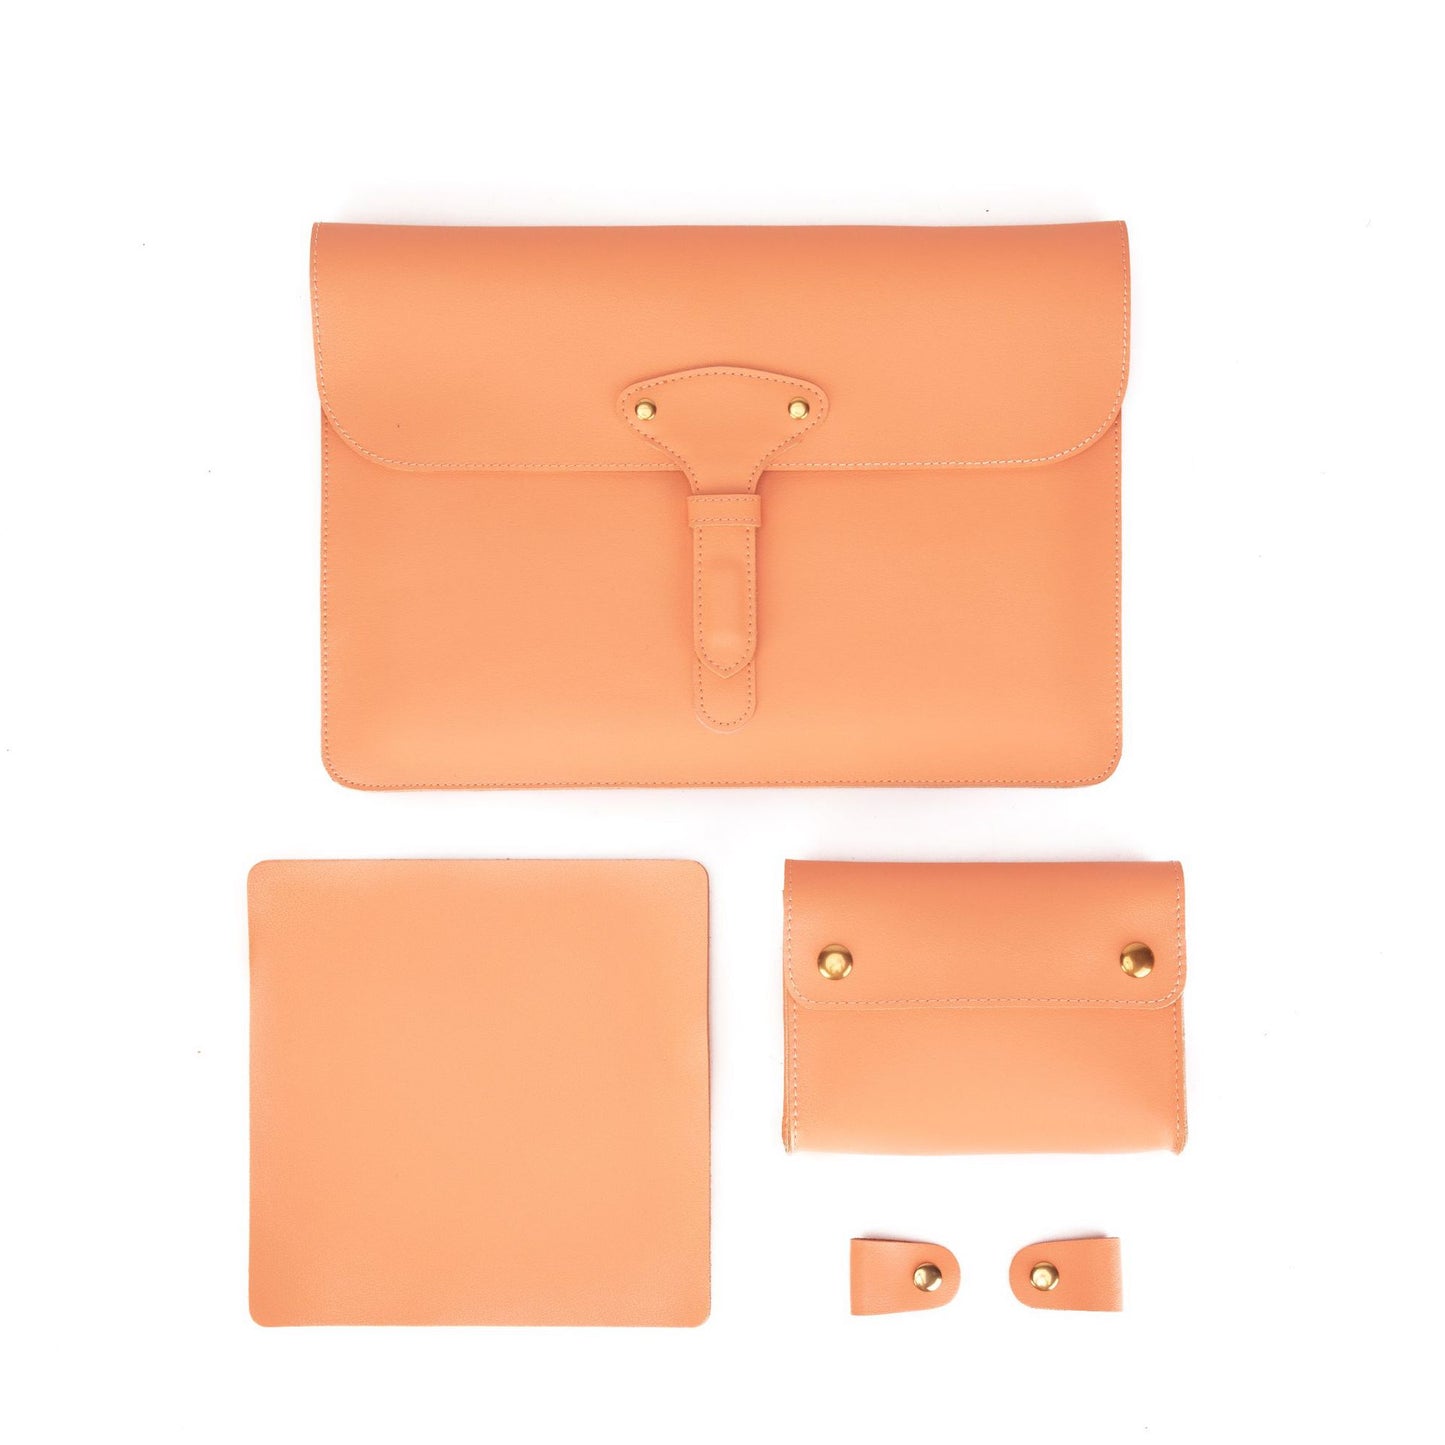 Fashion Women Leather Laptop Case 4pcs for Macbook-Leather Macbook Cases-Orange-13inch-Free Shipping Leatheretro